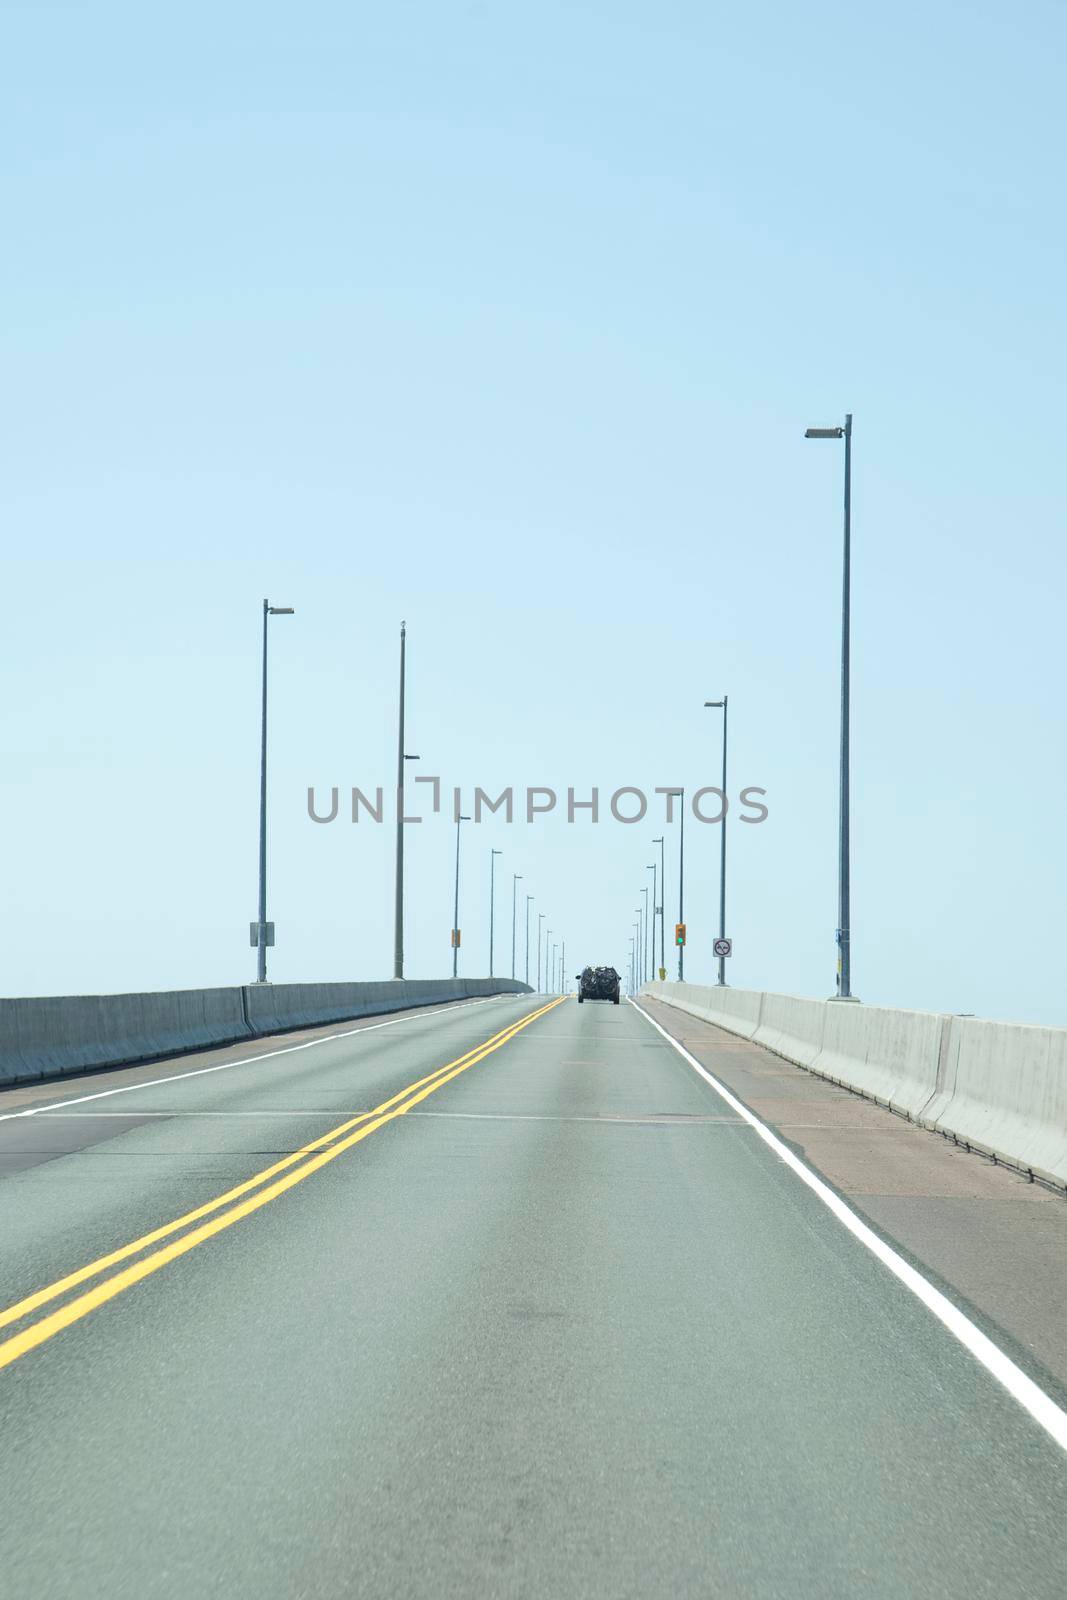 Confederation Bridge, PEI - July 28, 2019: A car along the Confederation Bridge in PEI on a summer day 